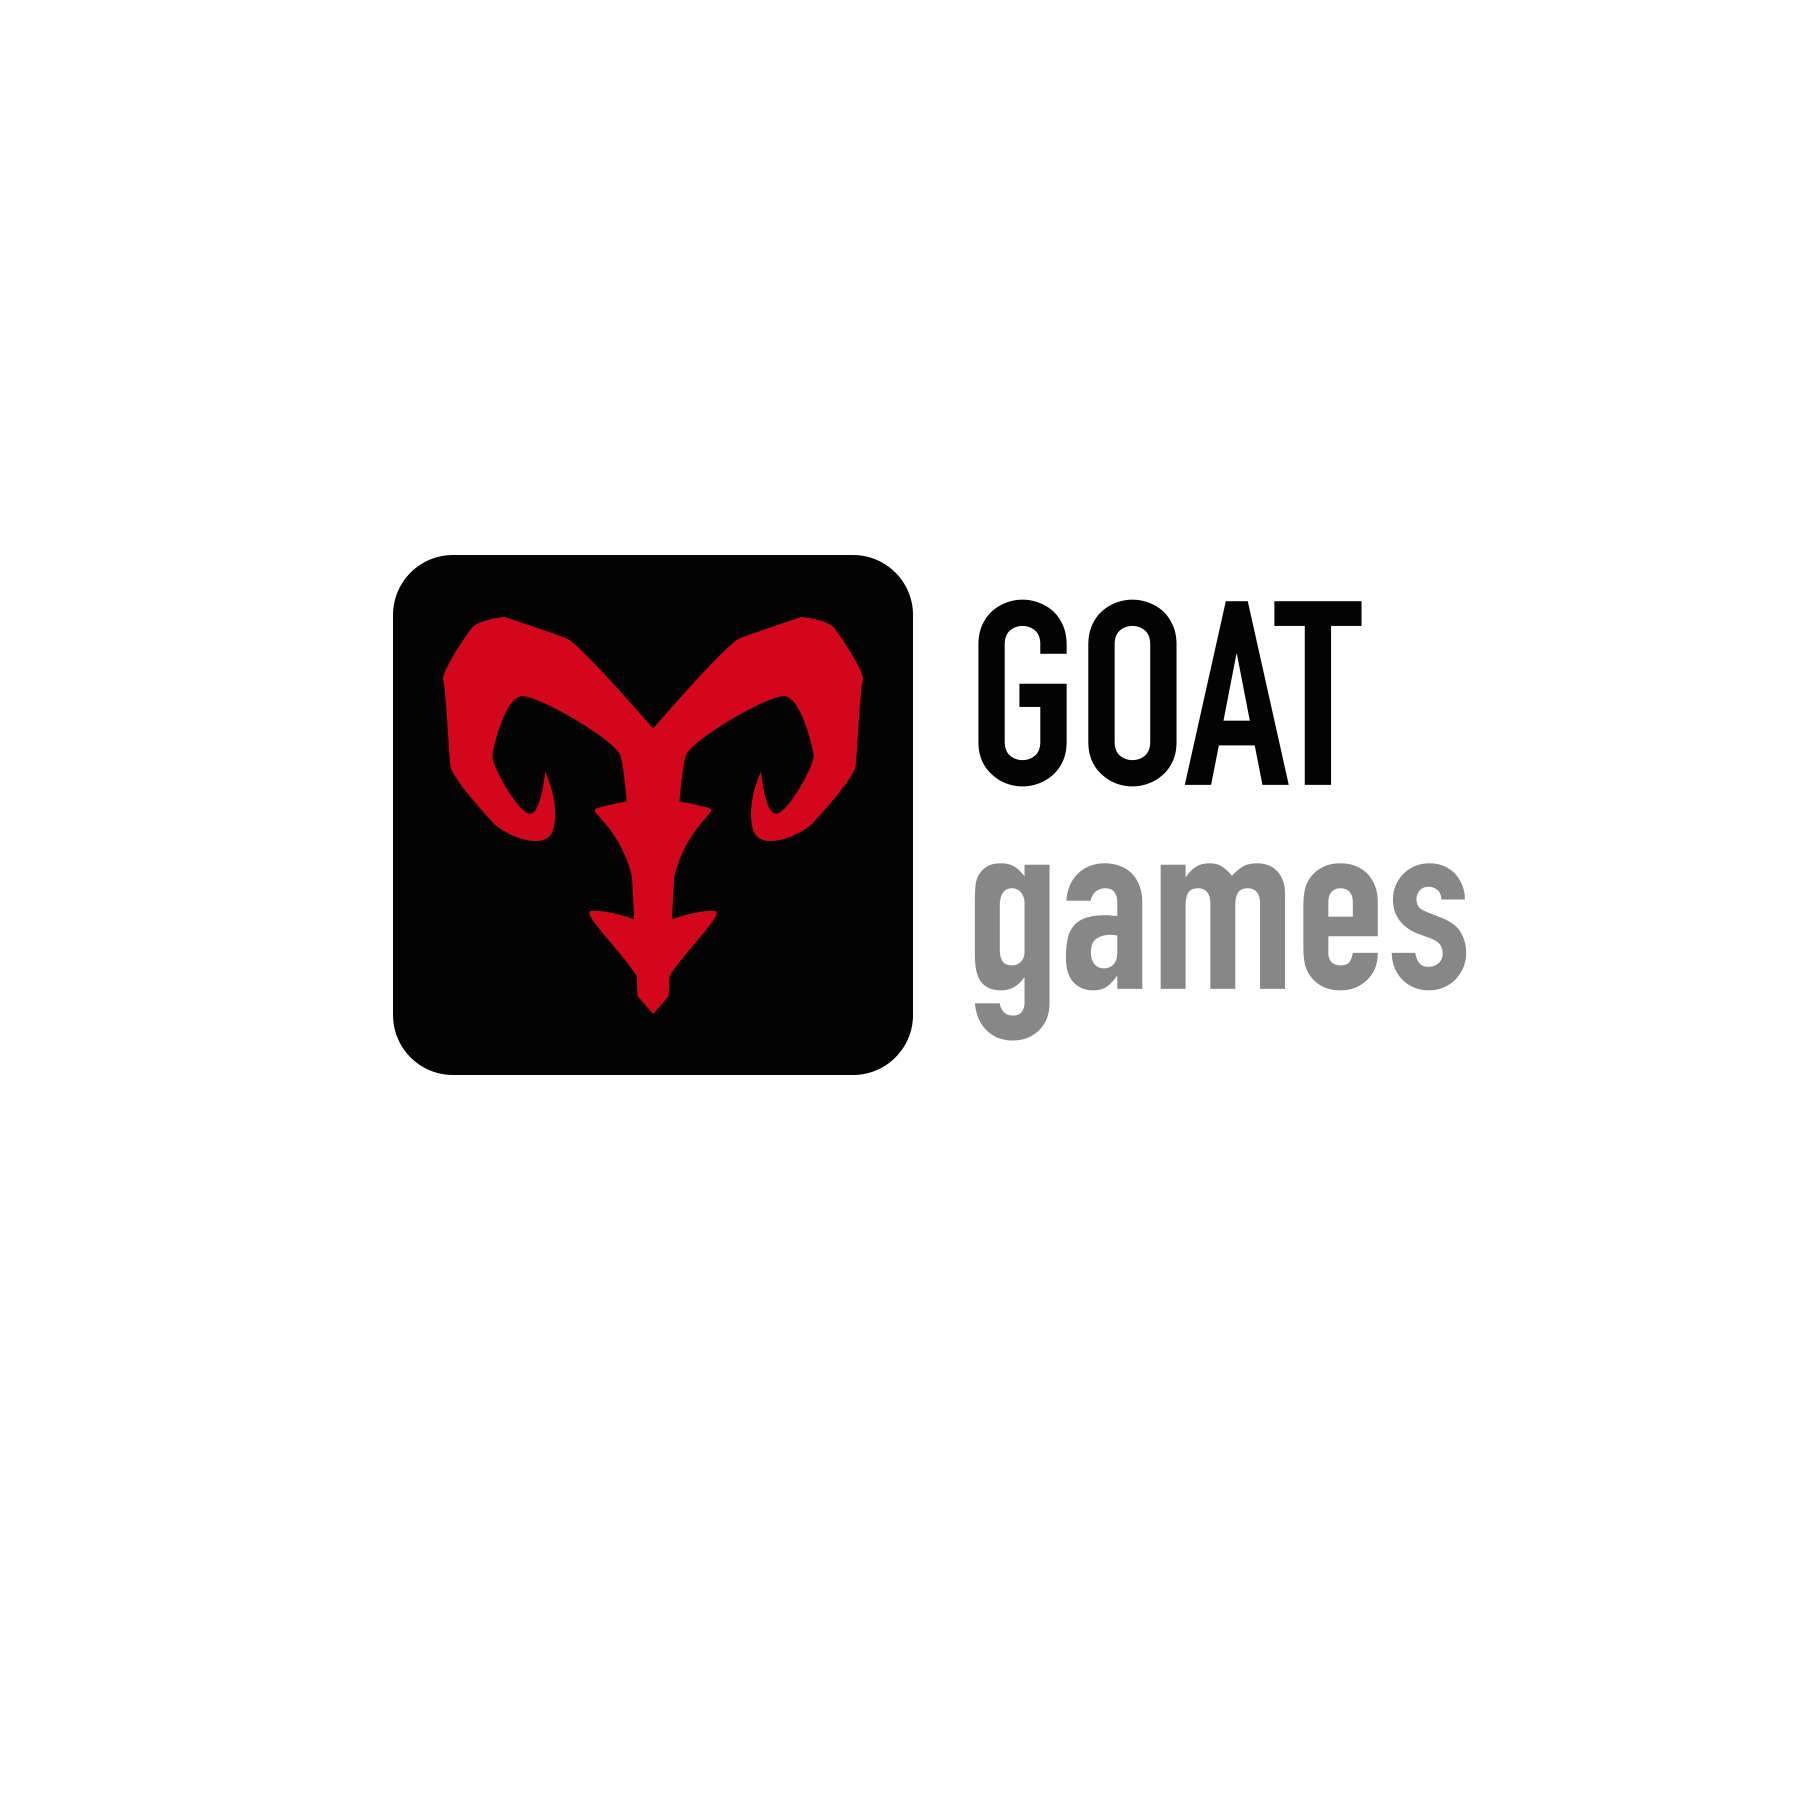 Goat games logo